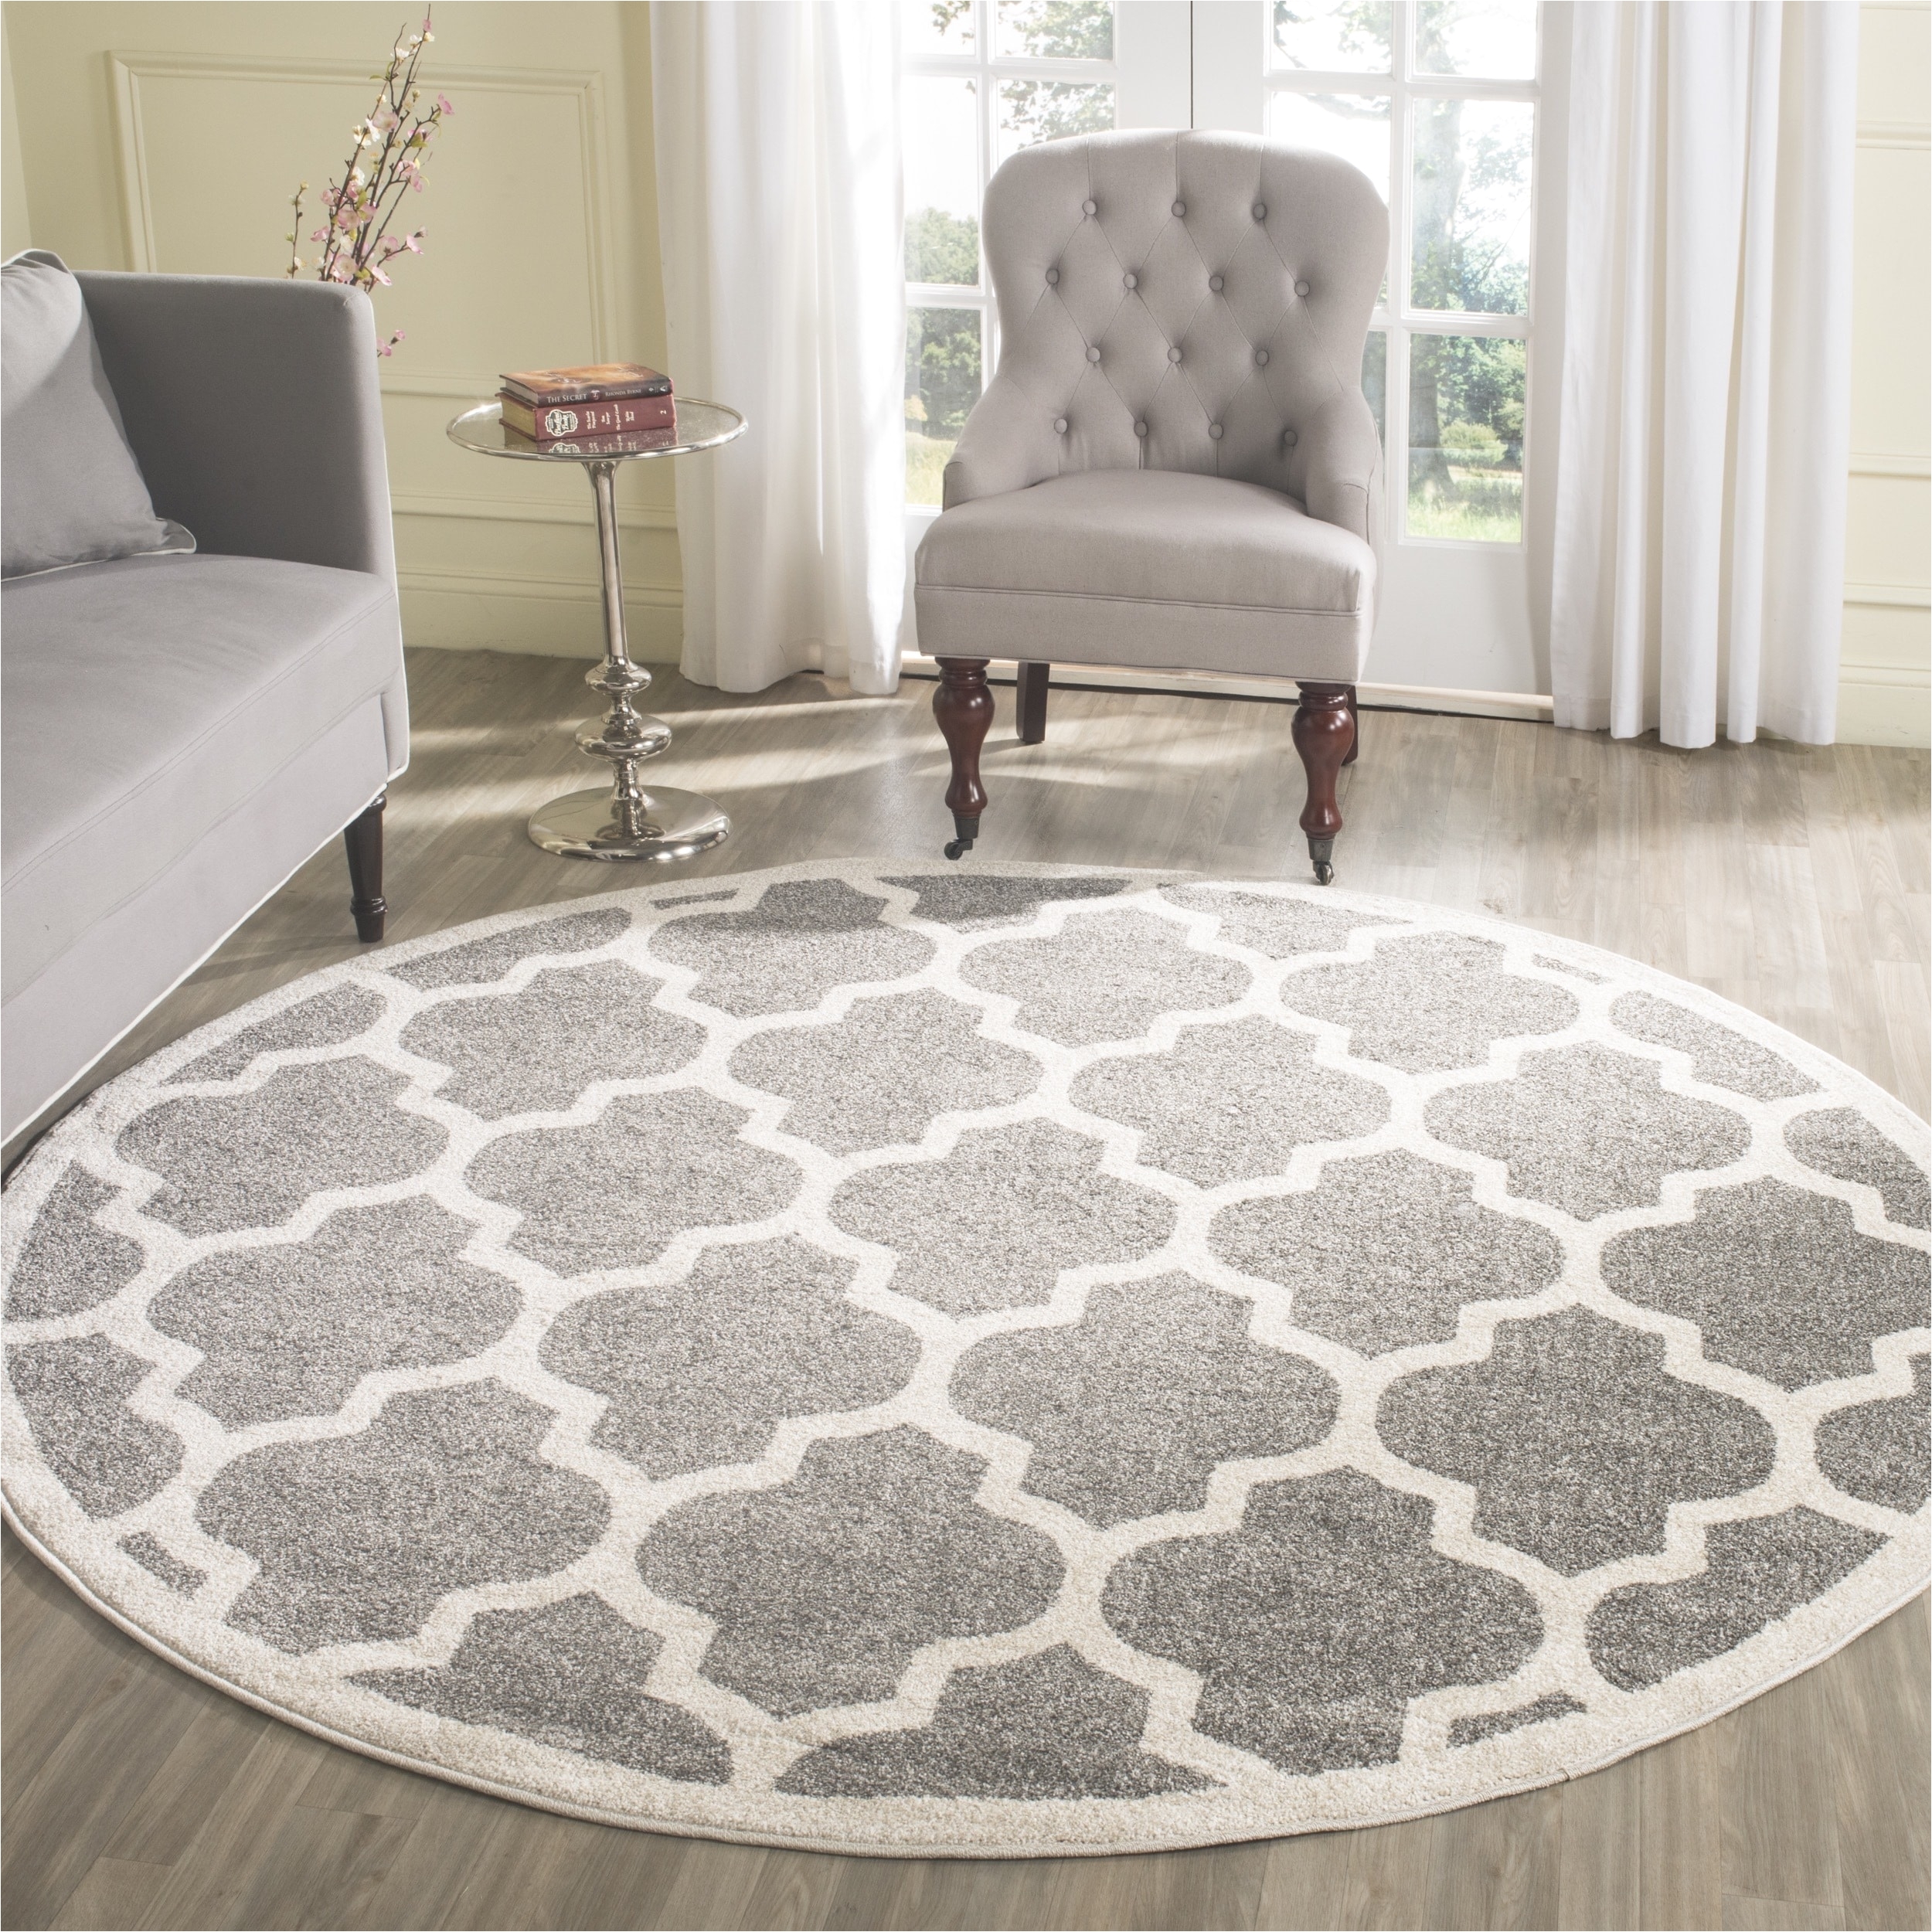 safavieh indoor outdoor amherst dark grey beige rug 9 round free shipping today overstock 16688639